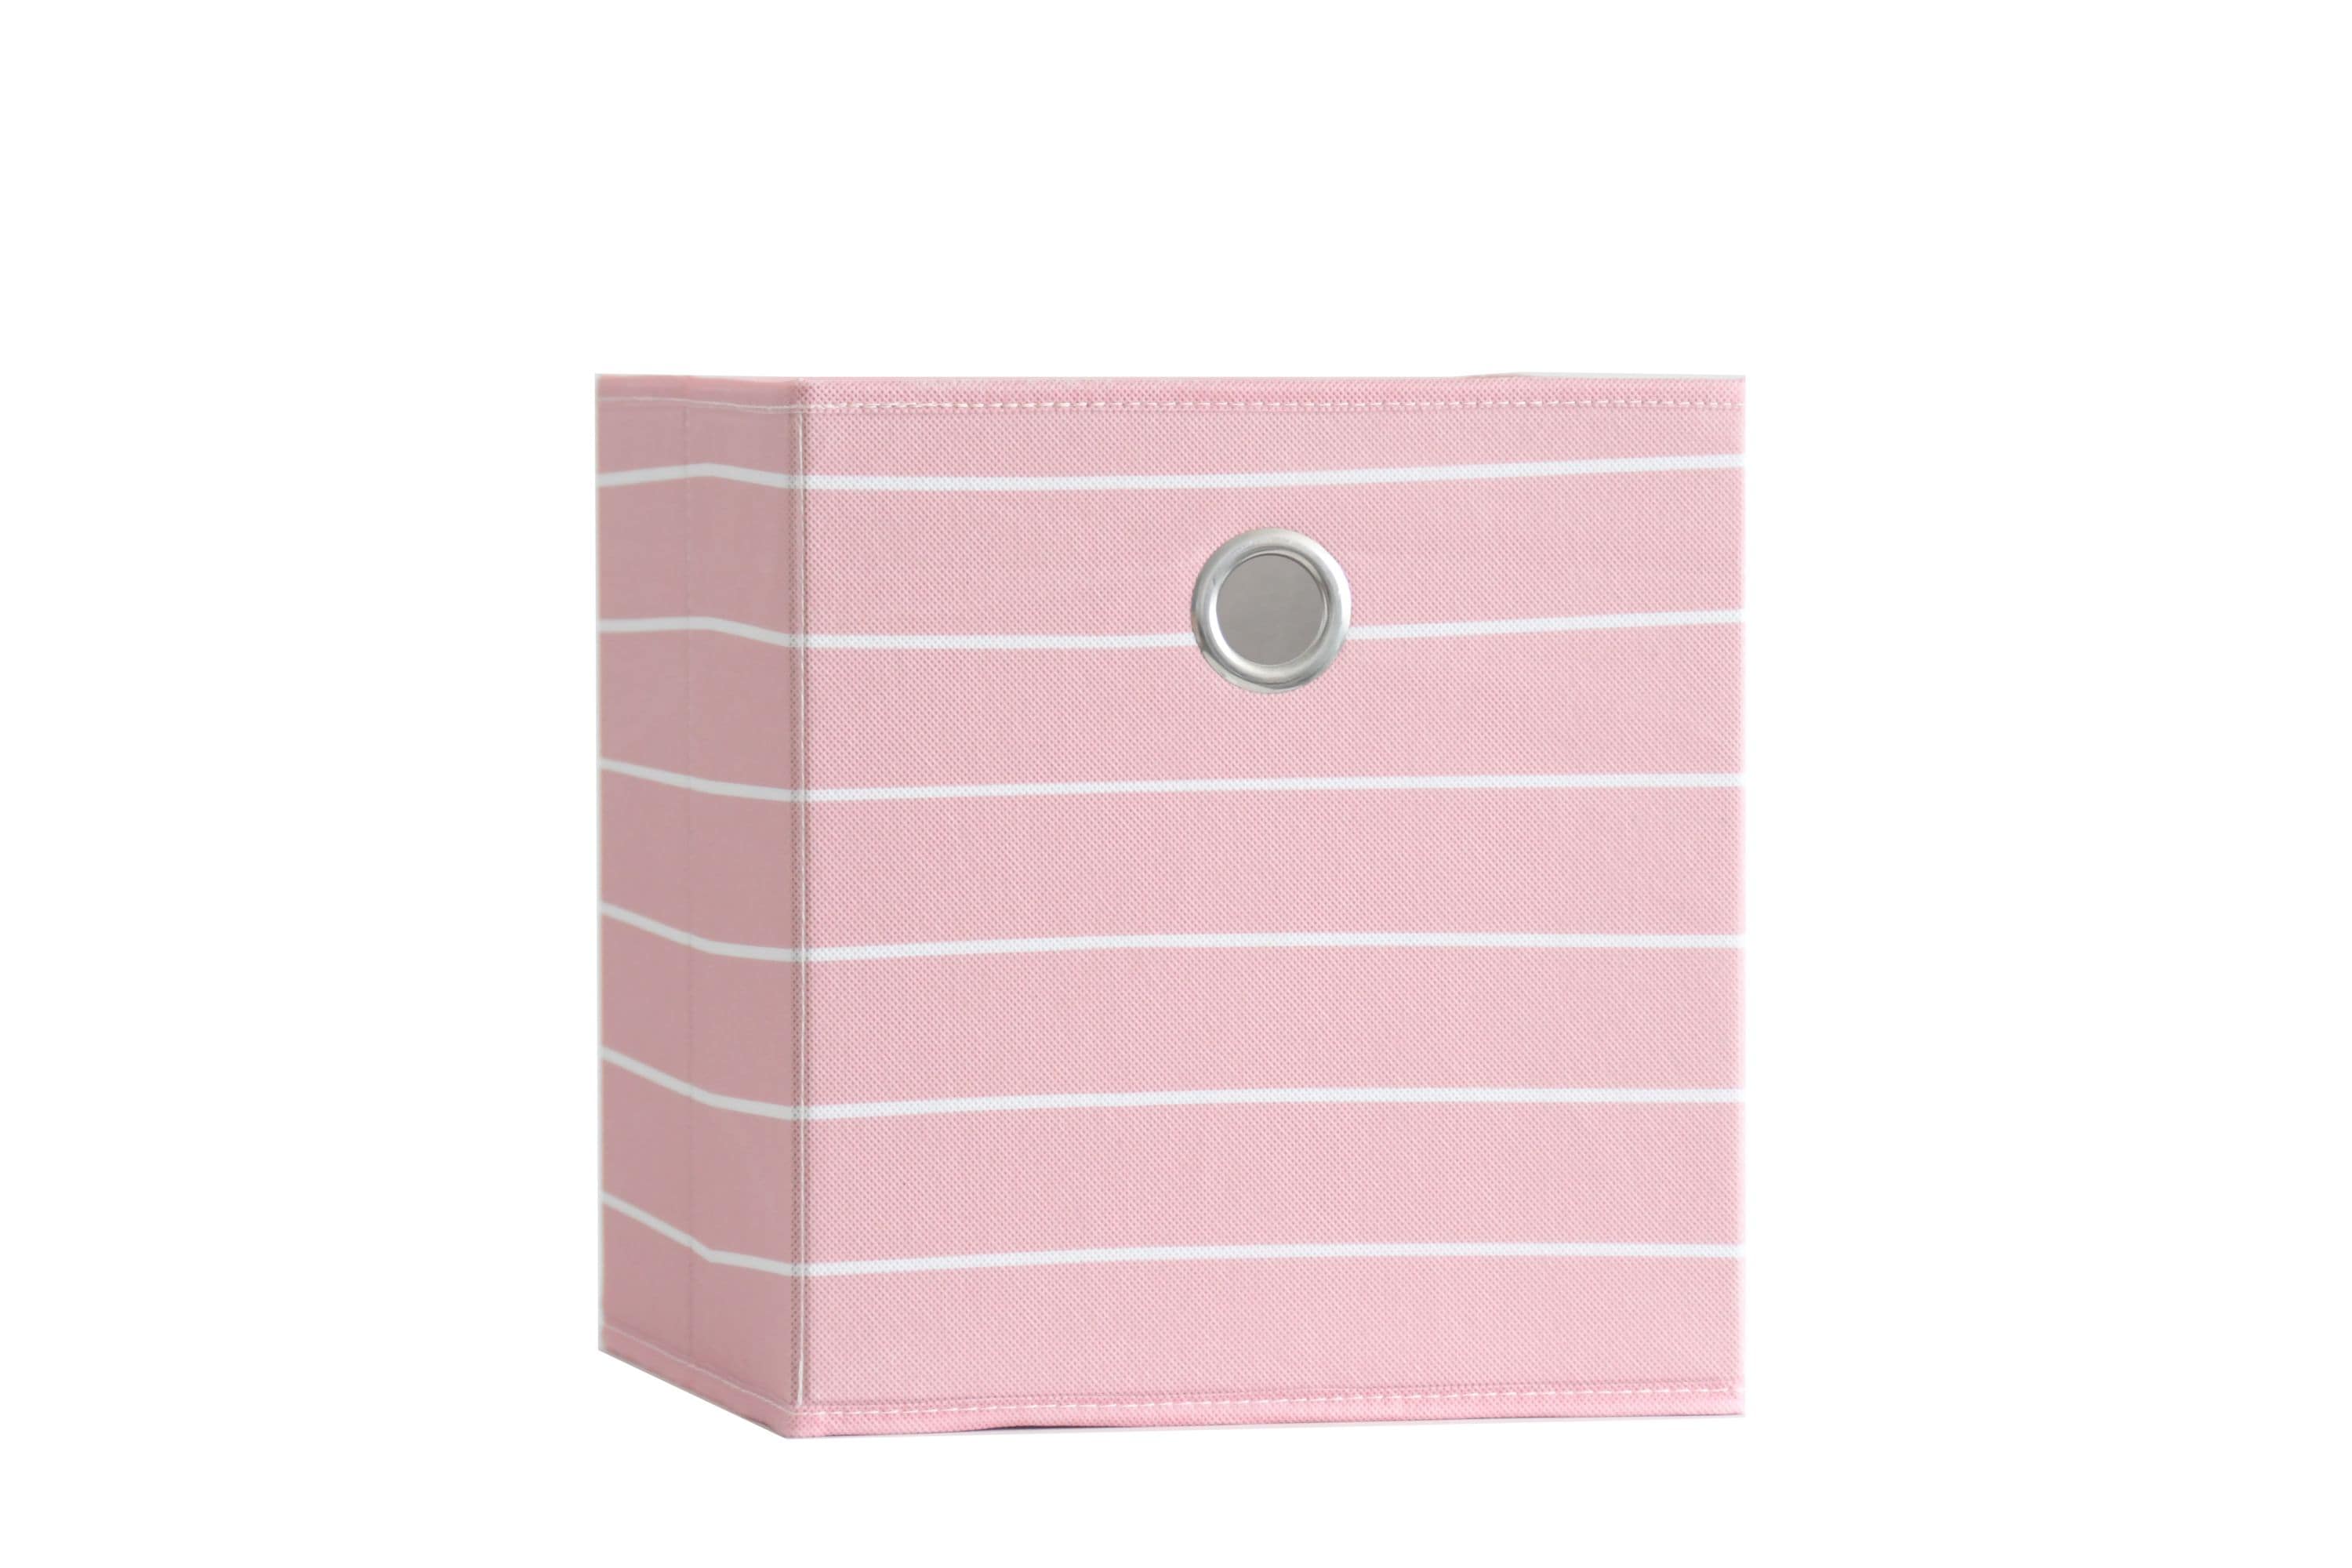 The Original Pink Box Pbliner 18-inch x 12-Feet Drawer Liner, Pink